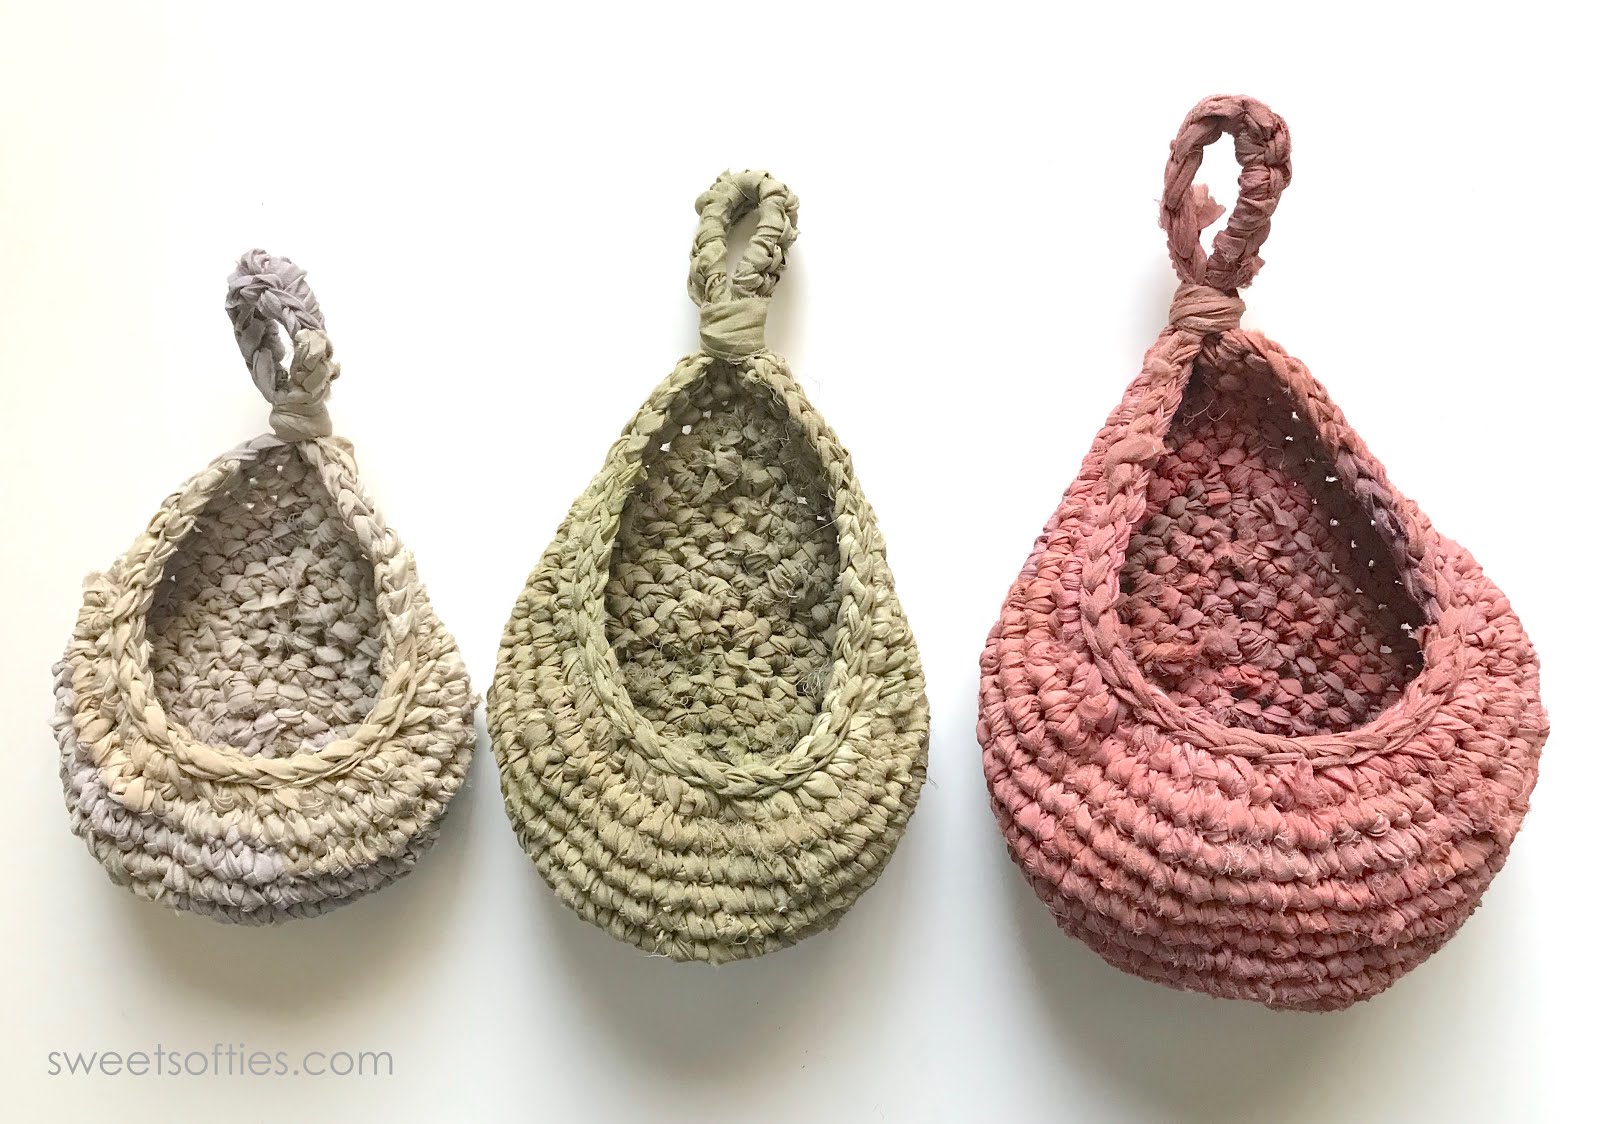 21 Crochet Basket Patterns for Your Home Decor & Organizational Needs